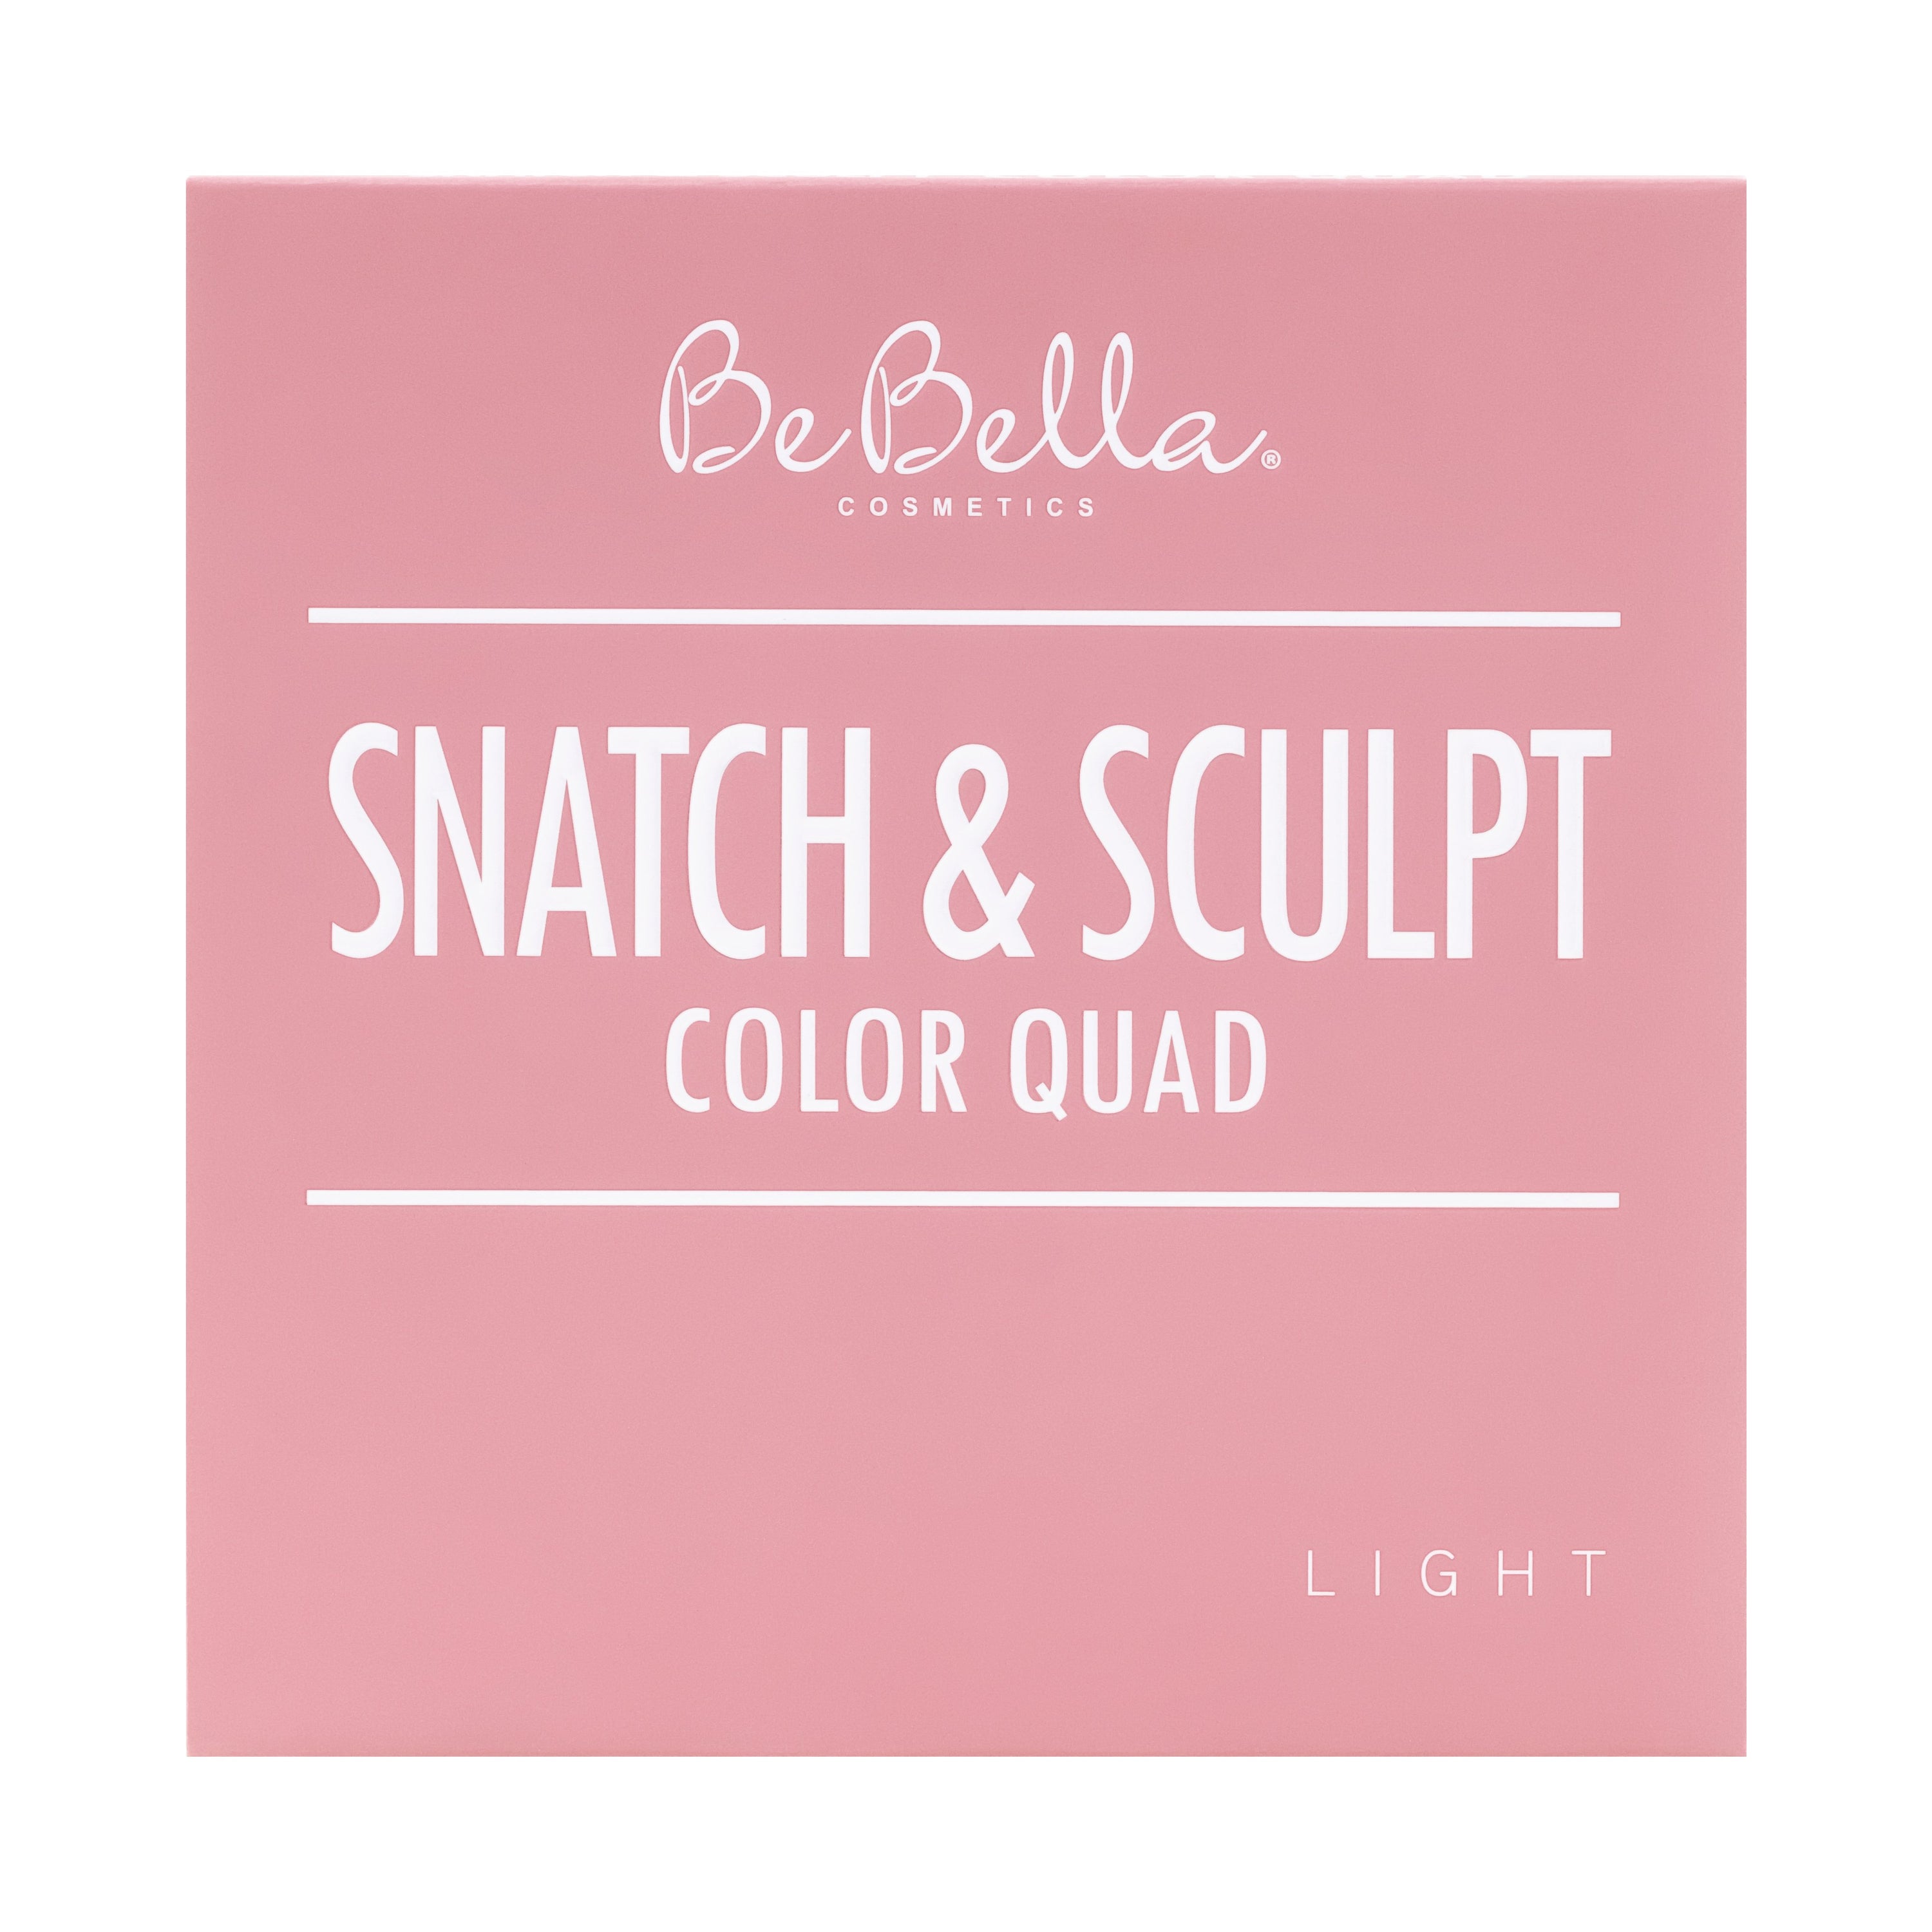 BeBella Cosmetics - Snatch & Sculpt Color Quad Palette Light